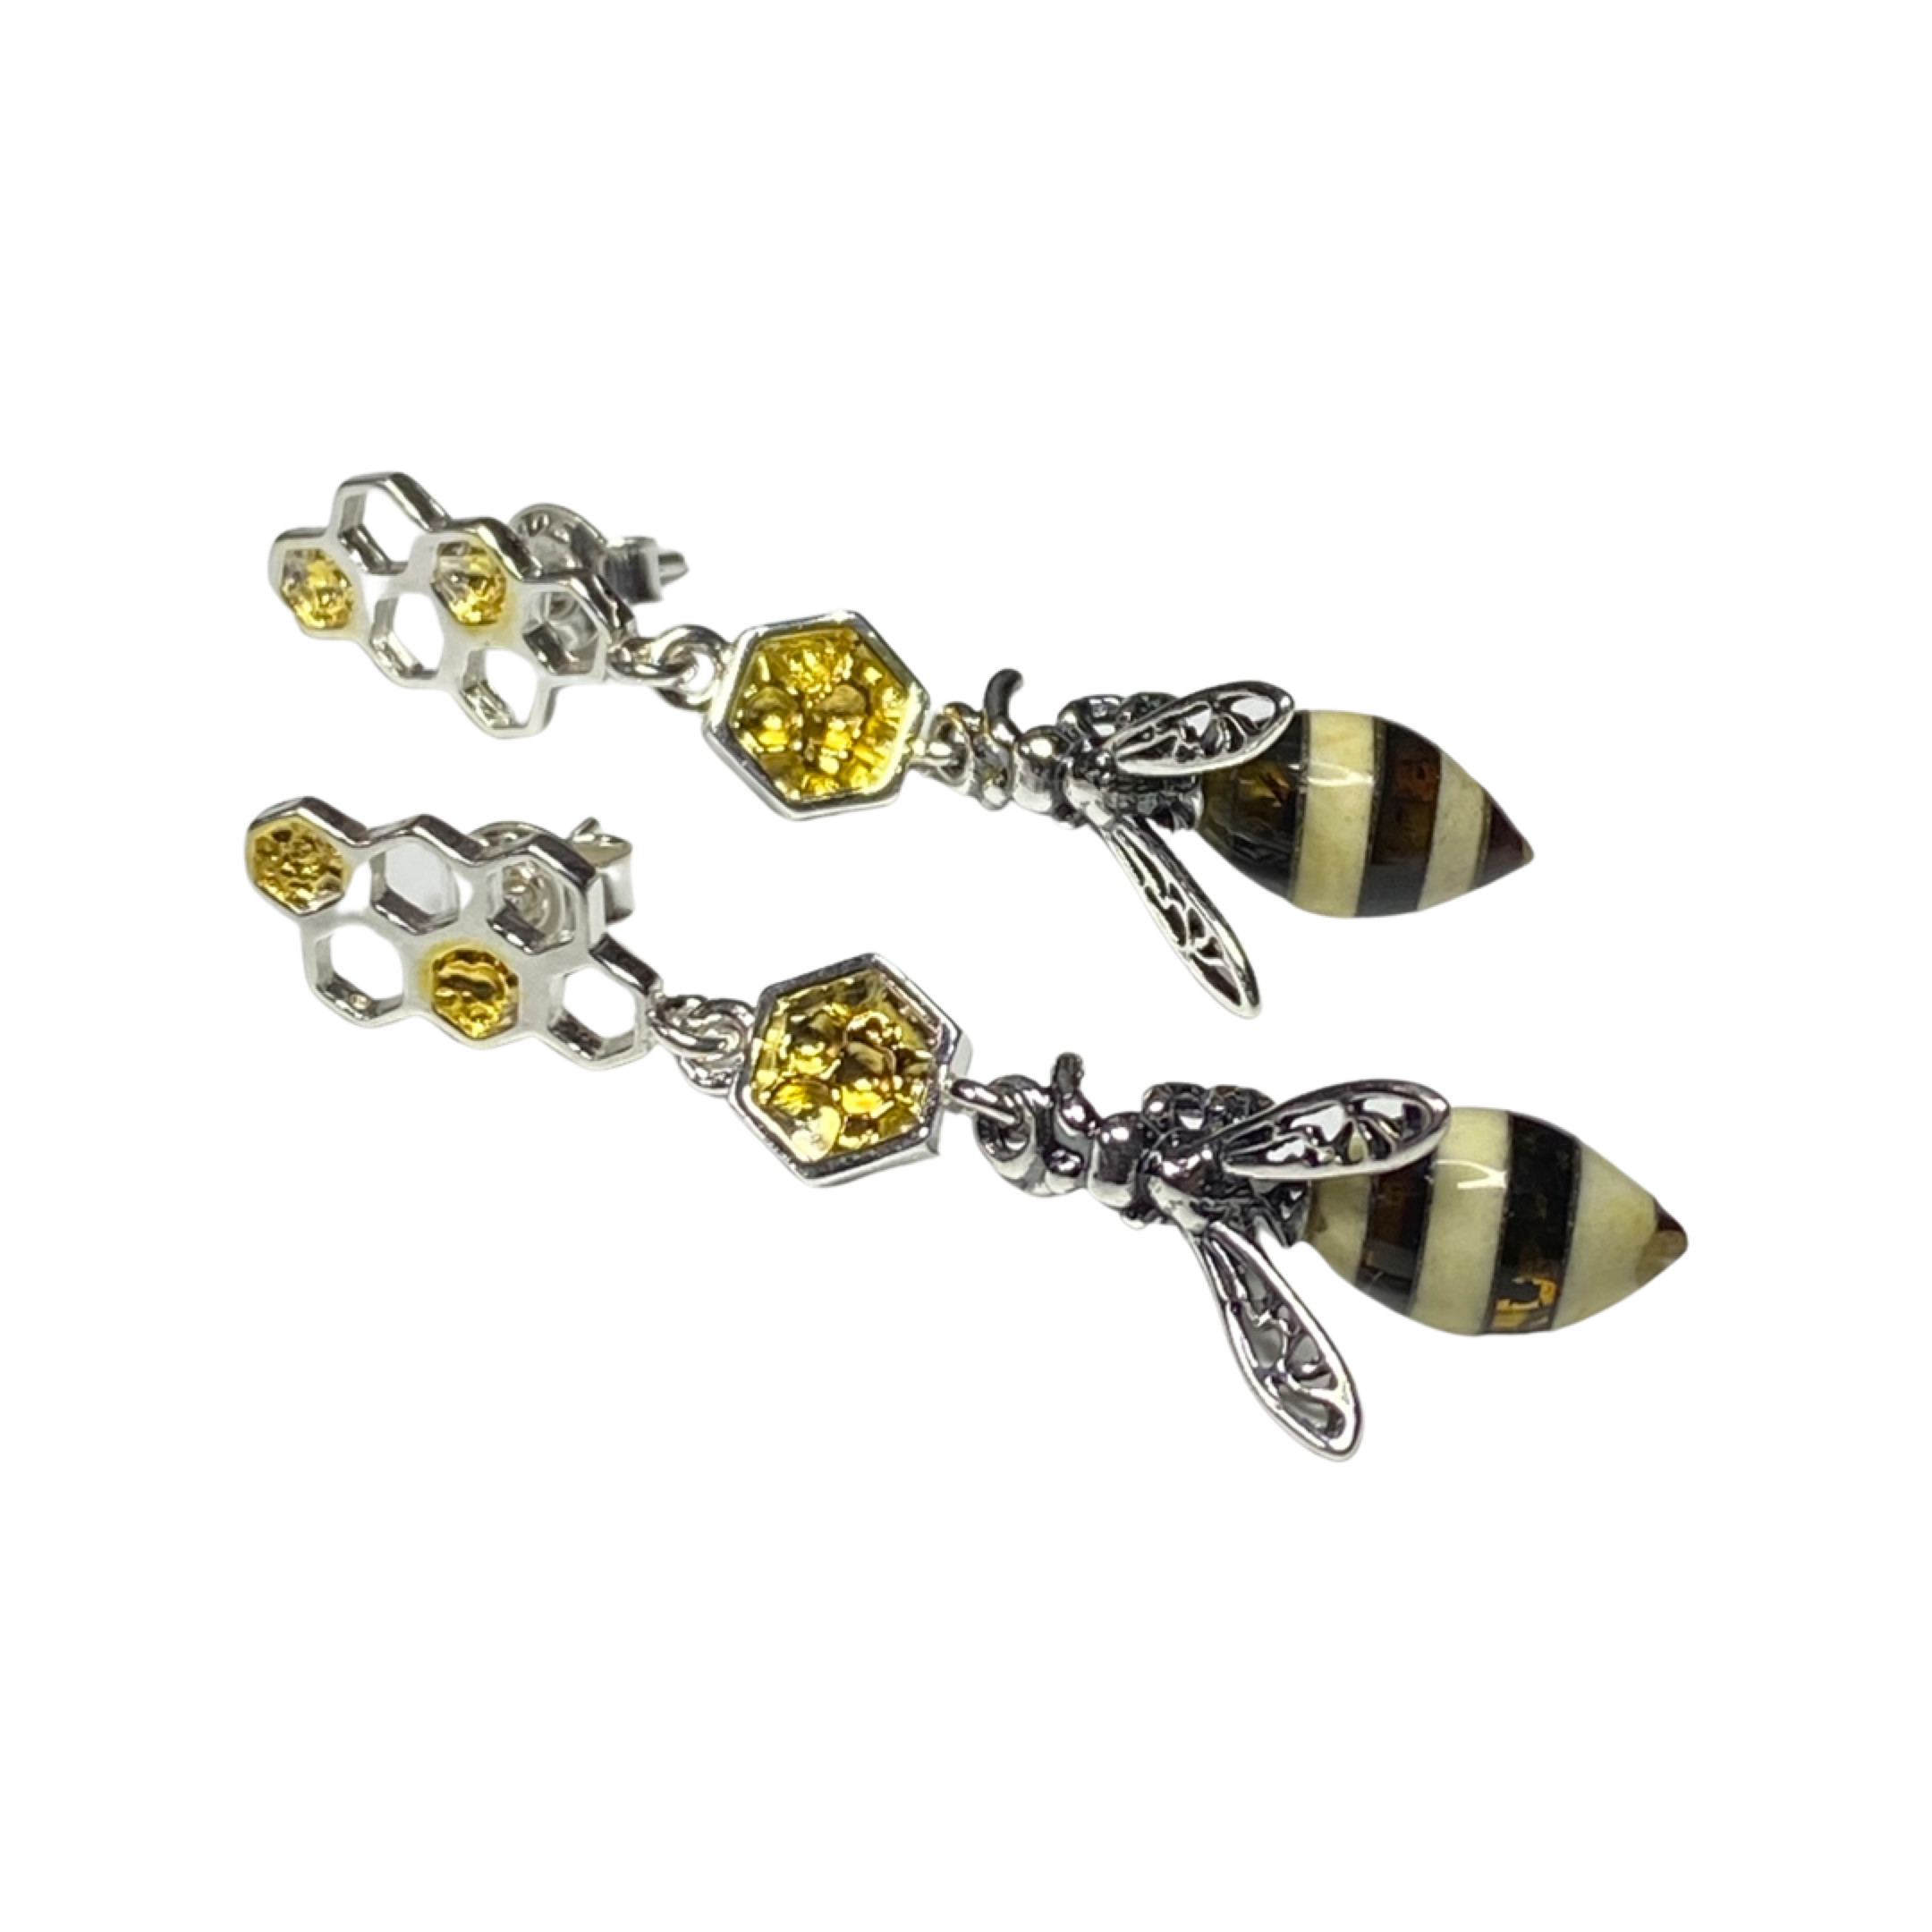 Honeycomb and Bee Earrings